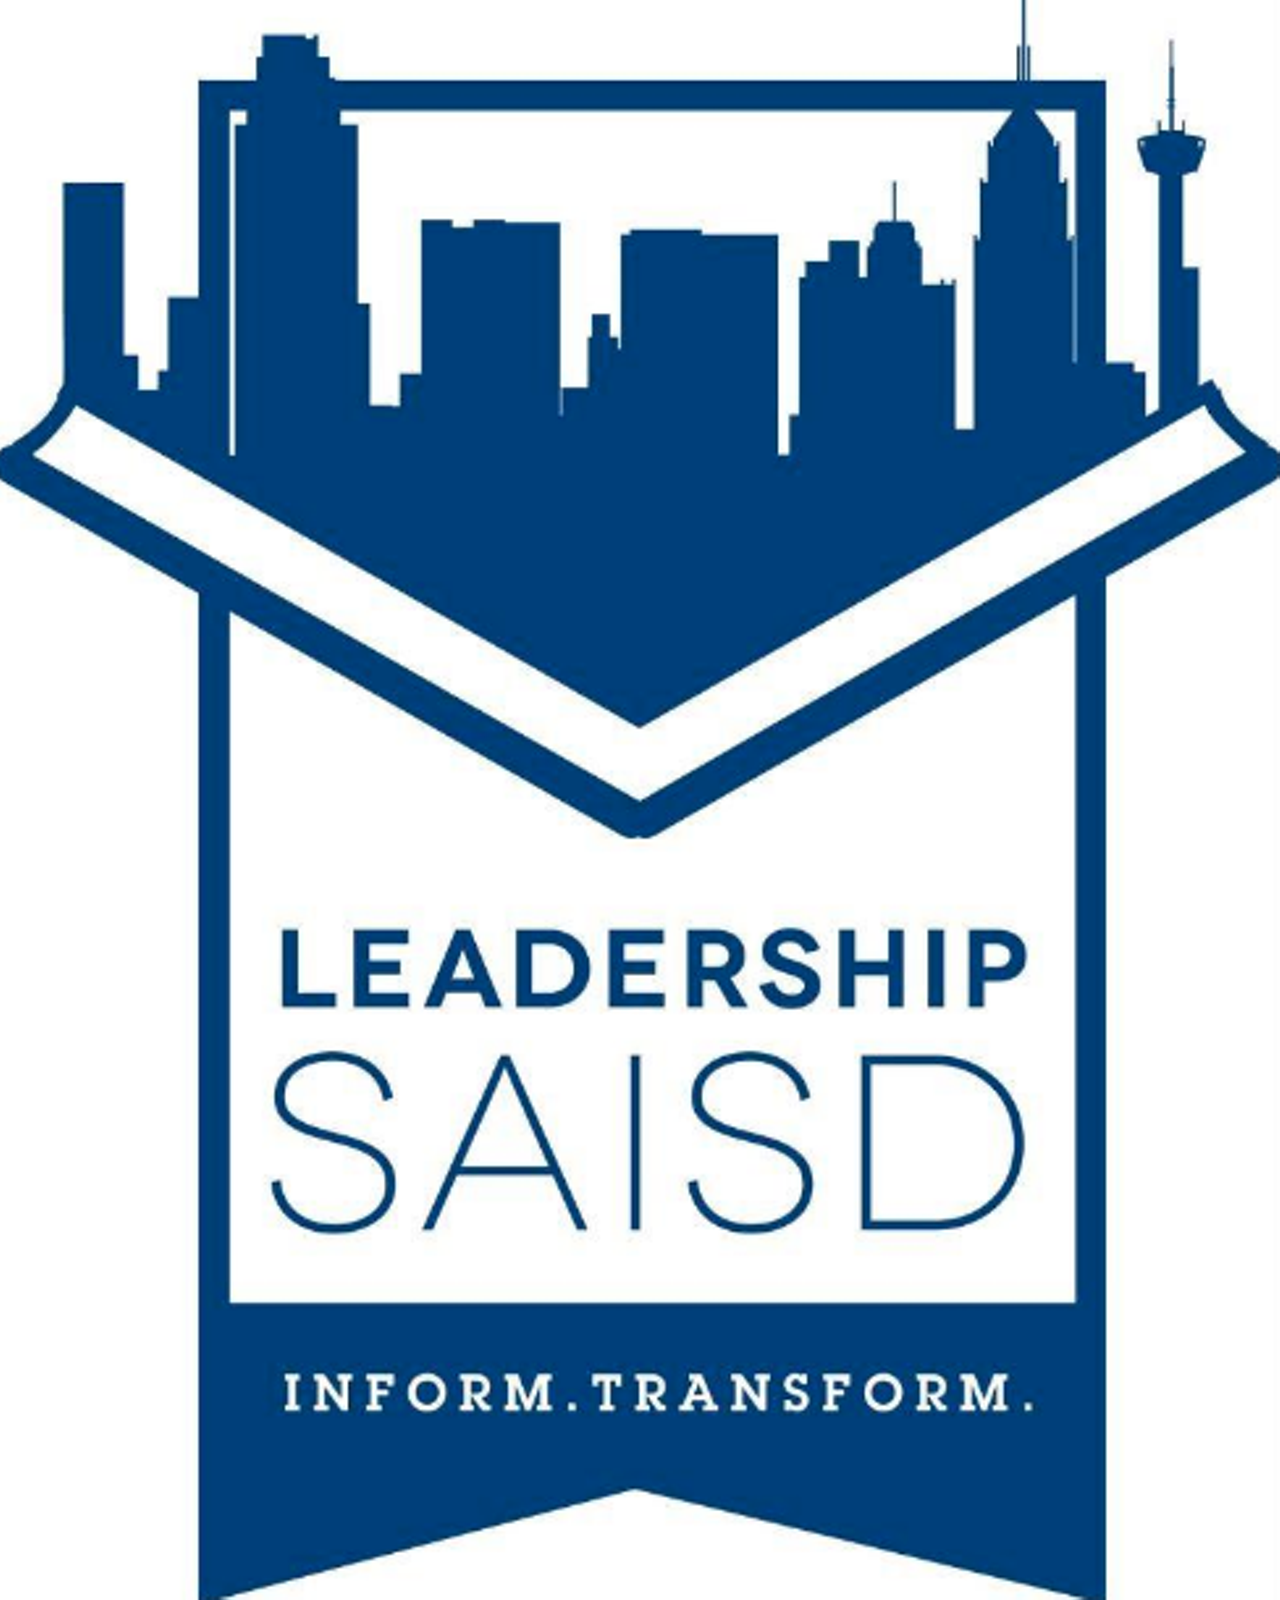  Leadership SAISD
Photo via Facebook/Leadership SAISD